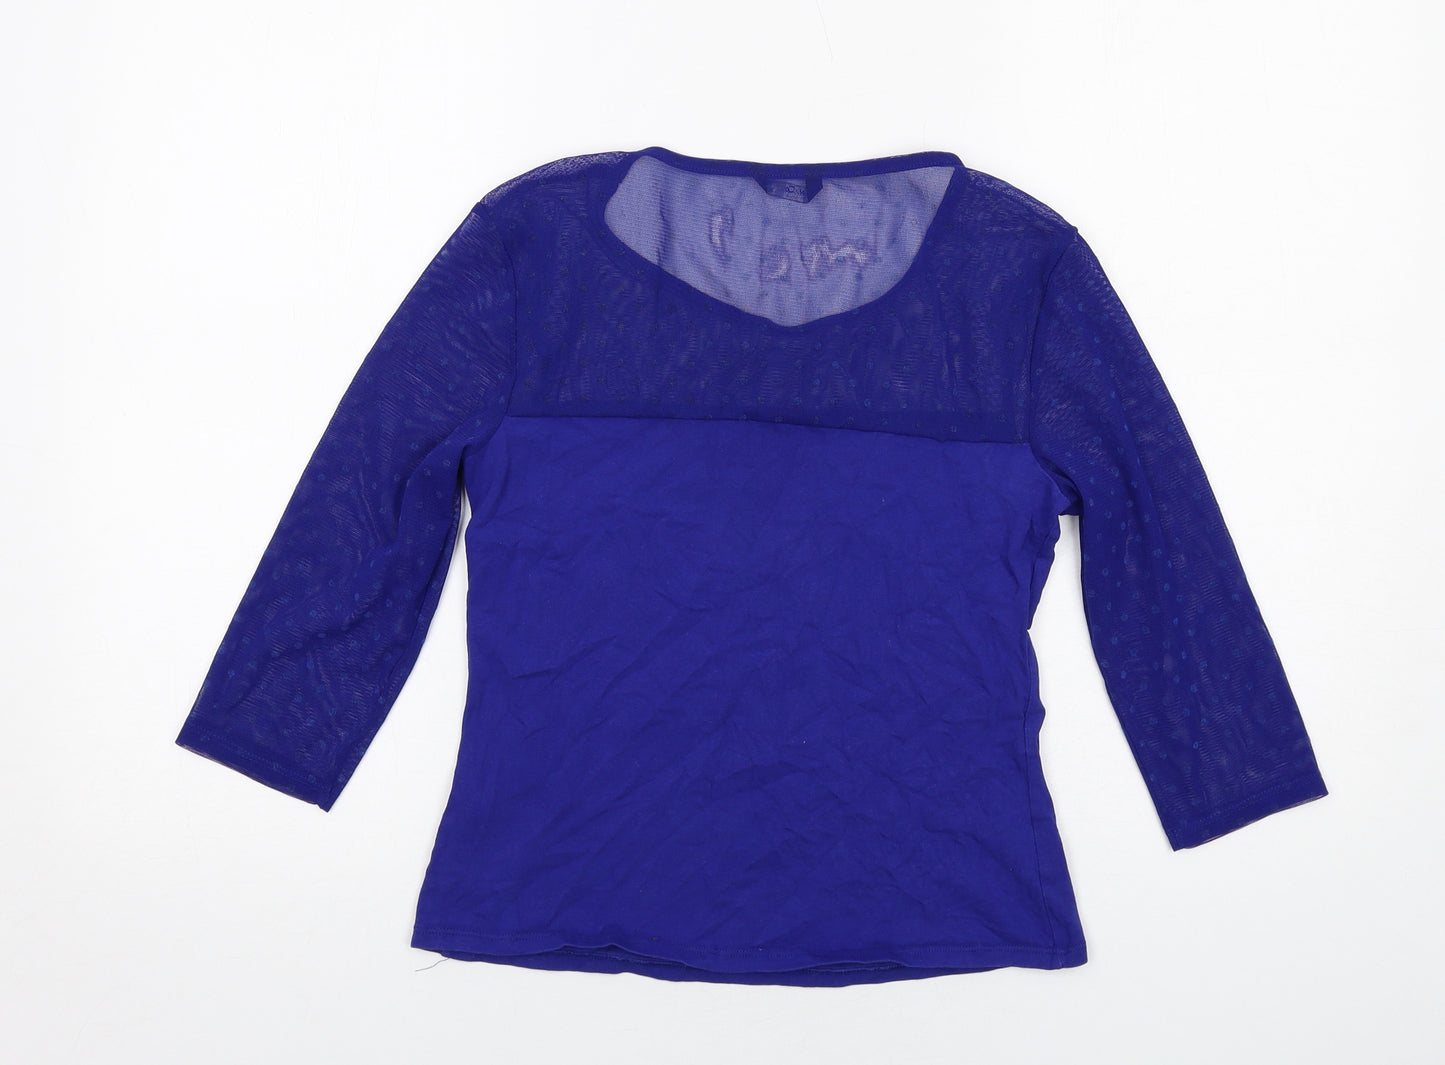 M&Co Womens Blue Cotton Basic T-Shirt Size 12 Round Neck